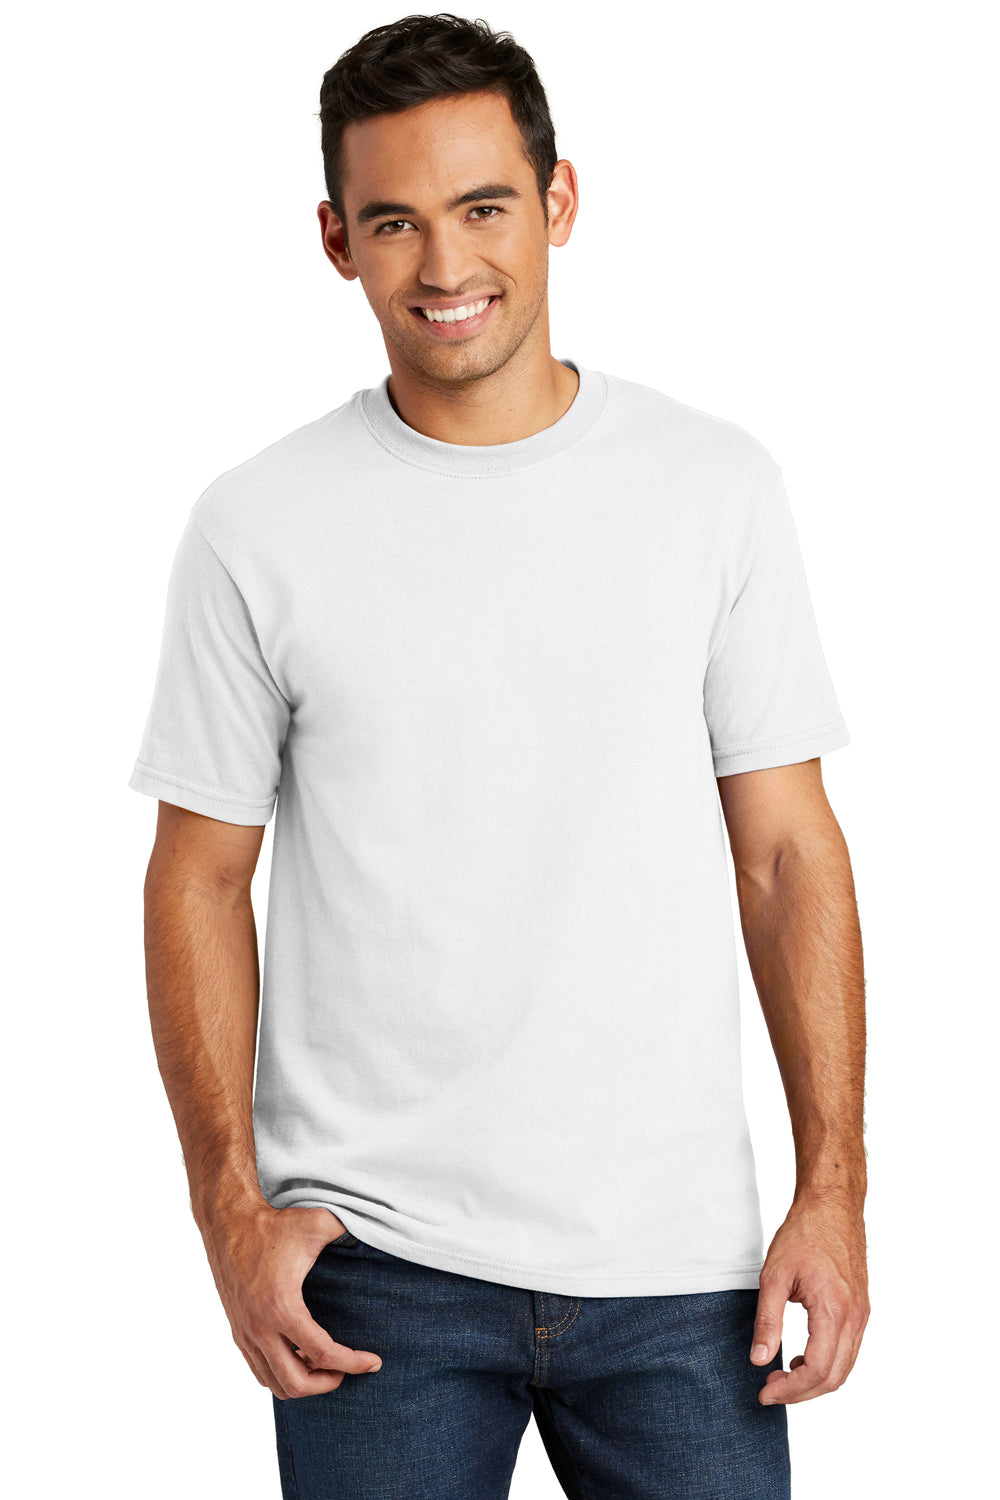 Port & Company USA100 Mens USA Made Short Sleeve Crewneck T-Shirt White Front